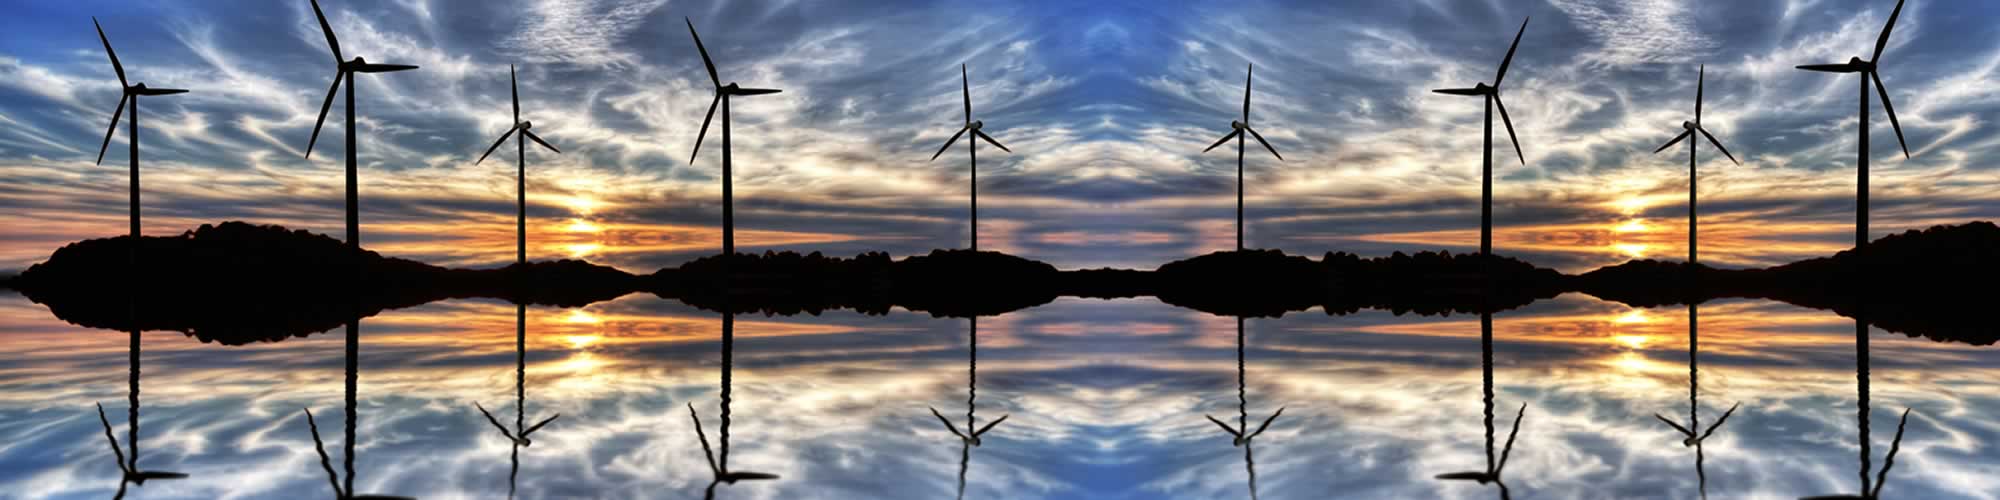 energy-production-windpower